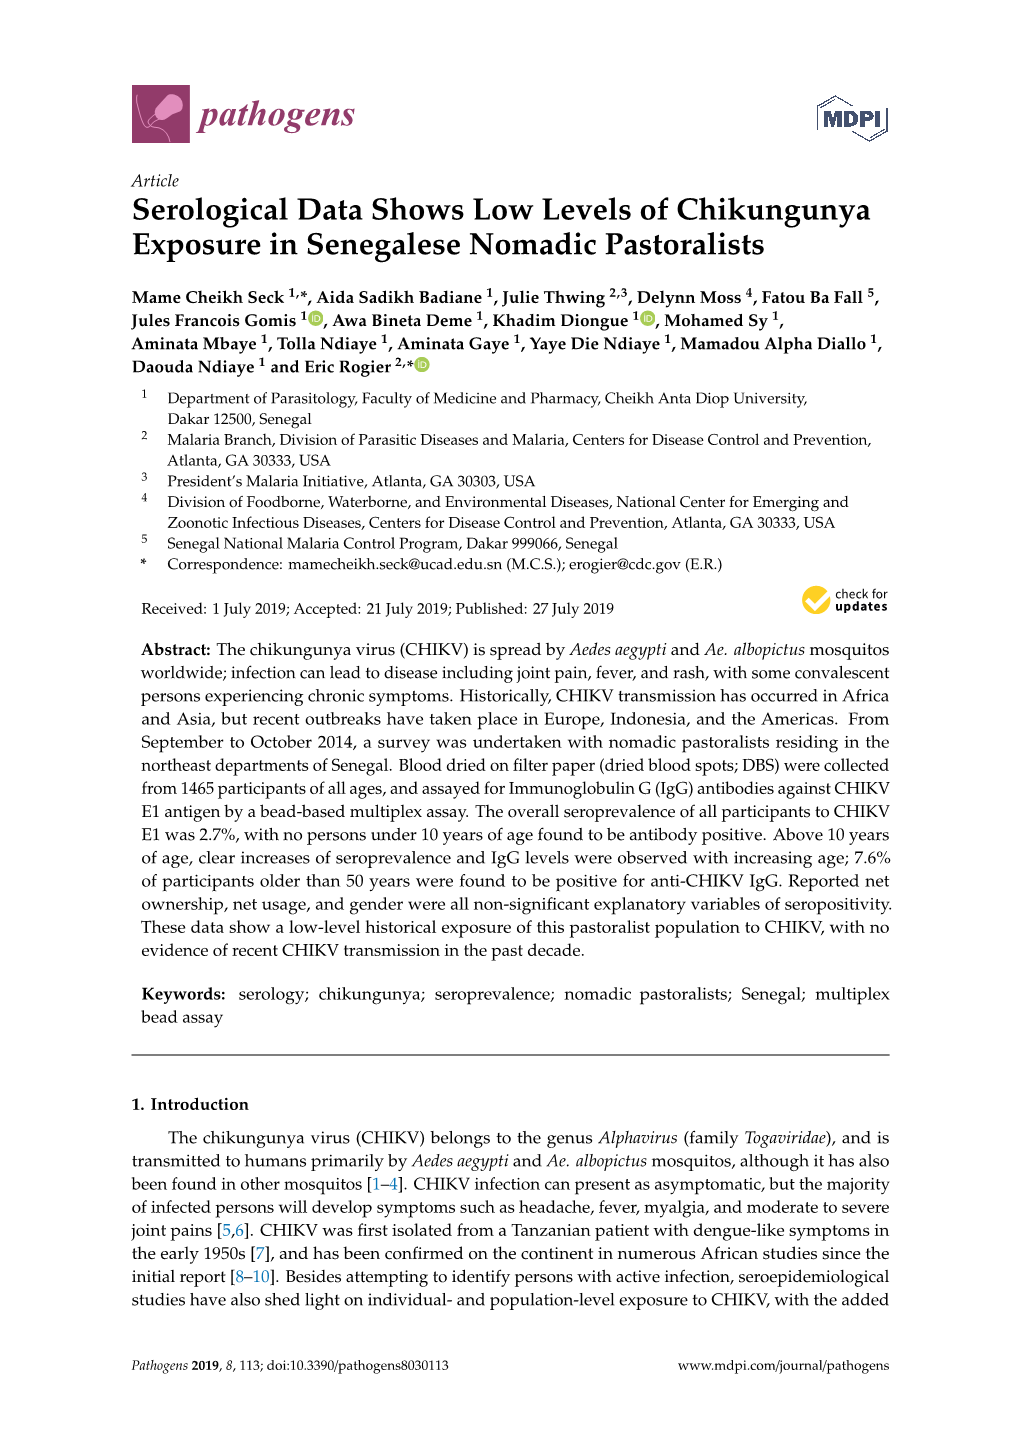 Serological Data Shows Low Levels of Chikungunya Exposure in Senegalese Nomadic Pastoralists